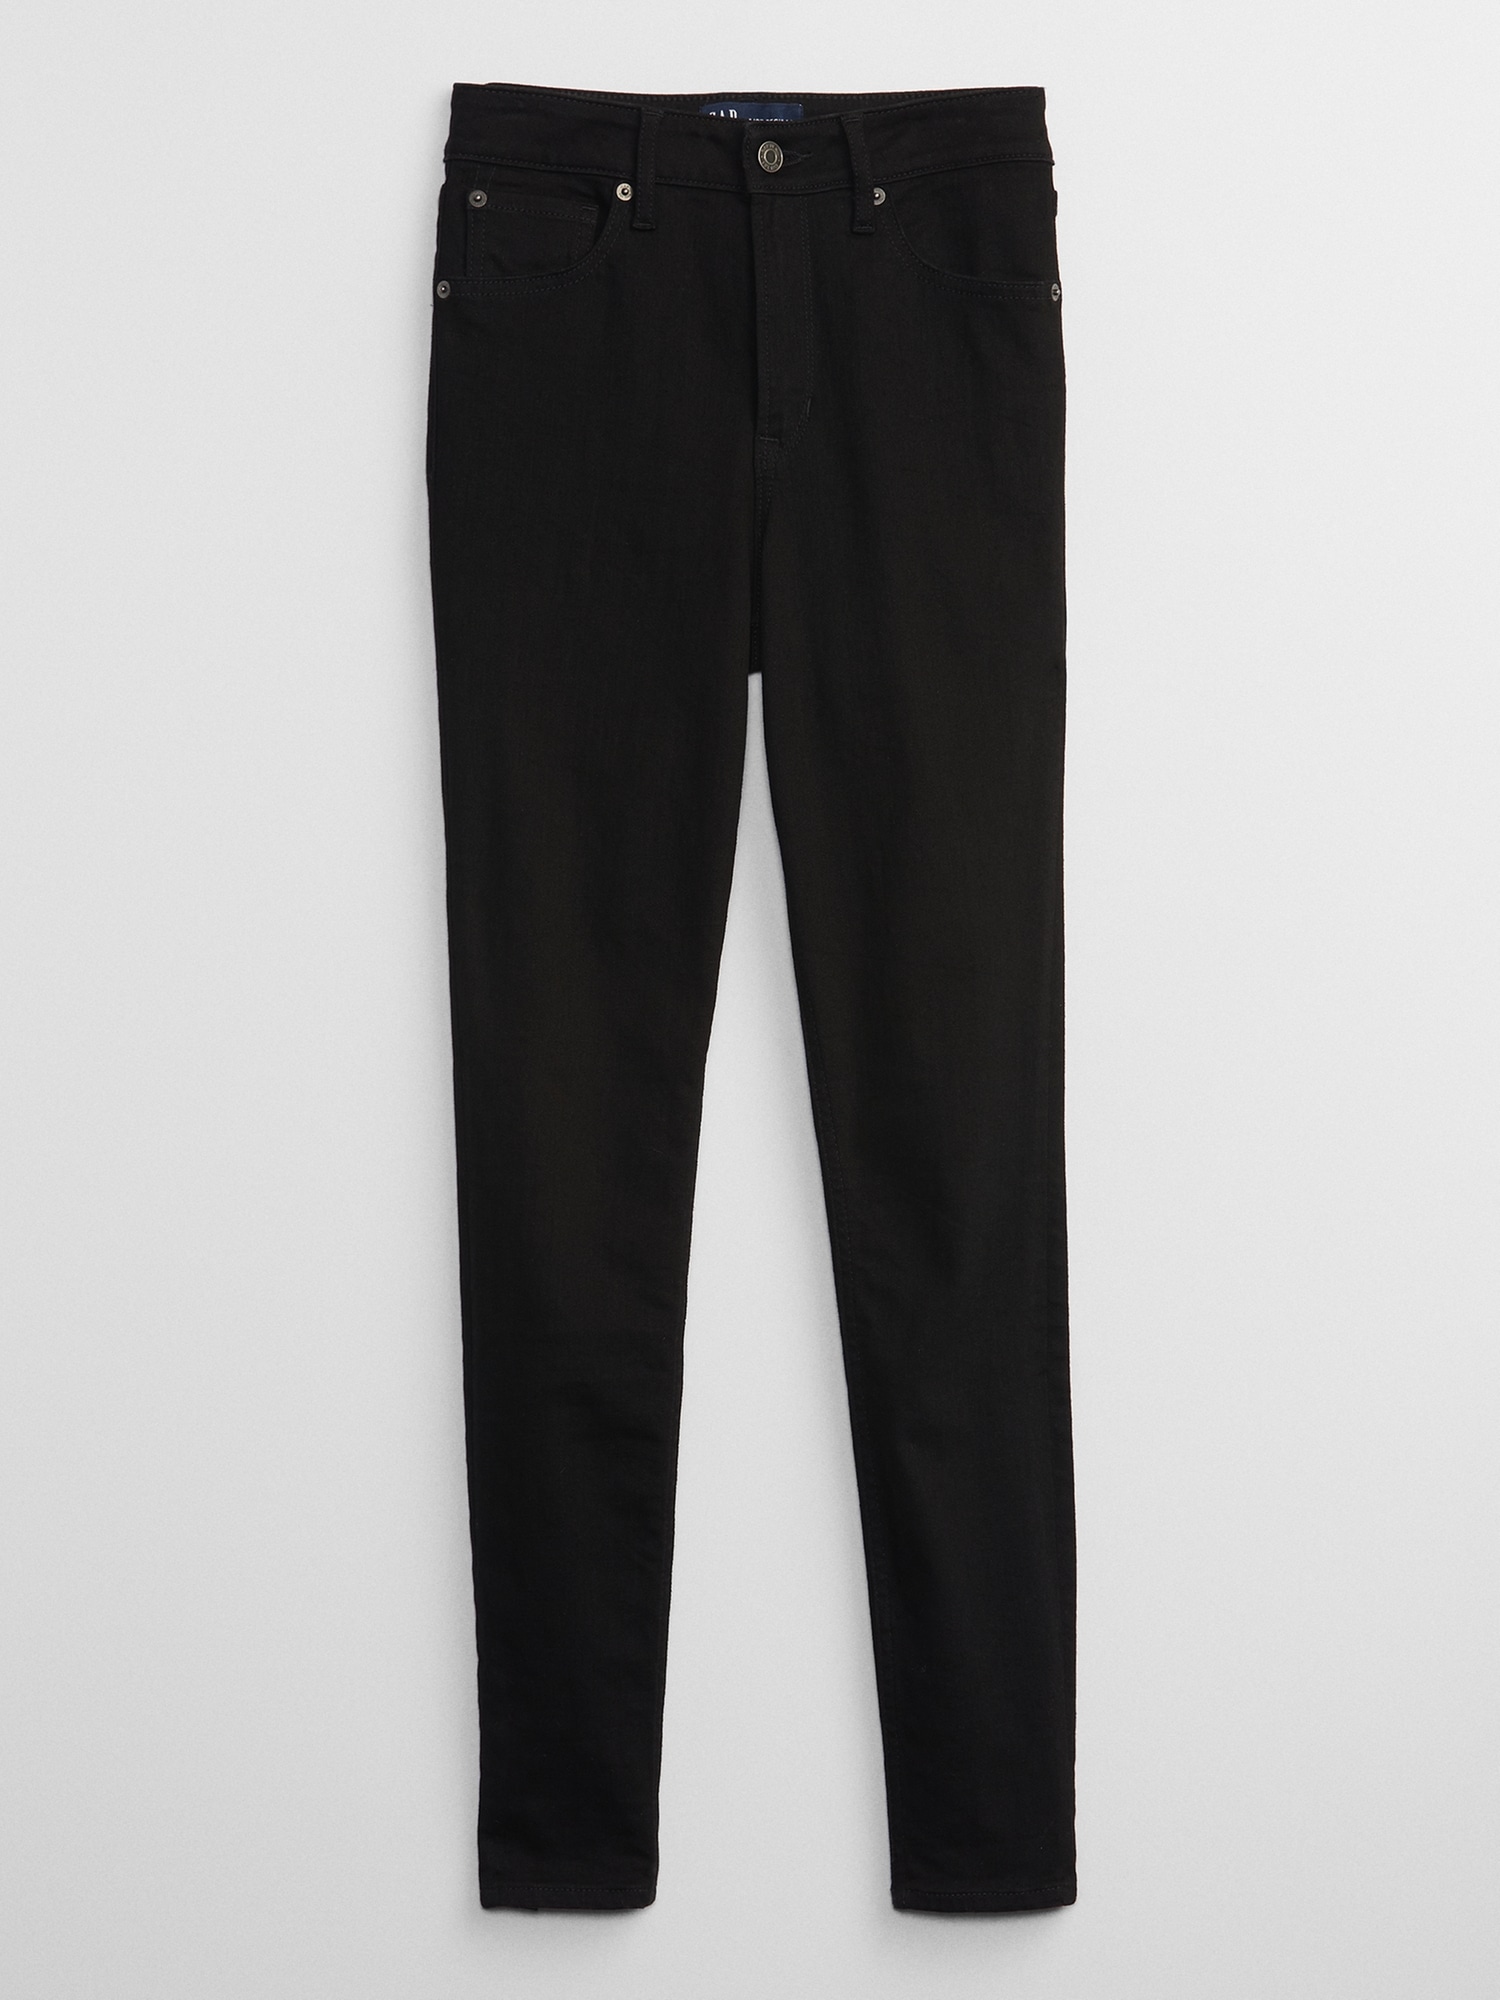 GAP Womens Legging Jeans W30 L29 Black Cotton, Vintage & Second-Hand  Clothing Online